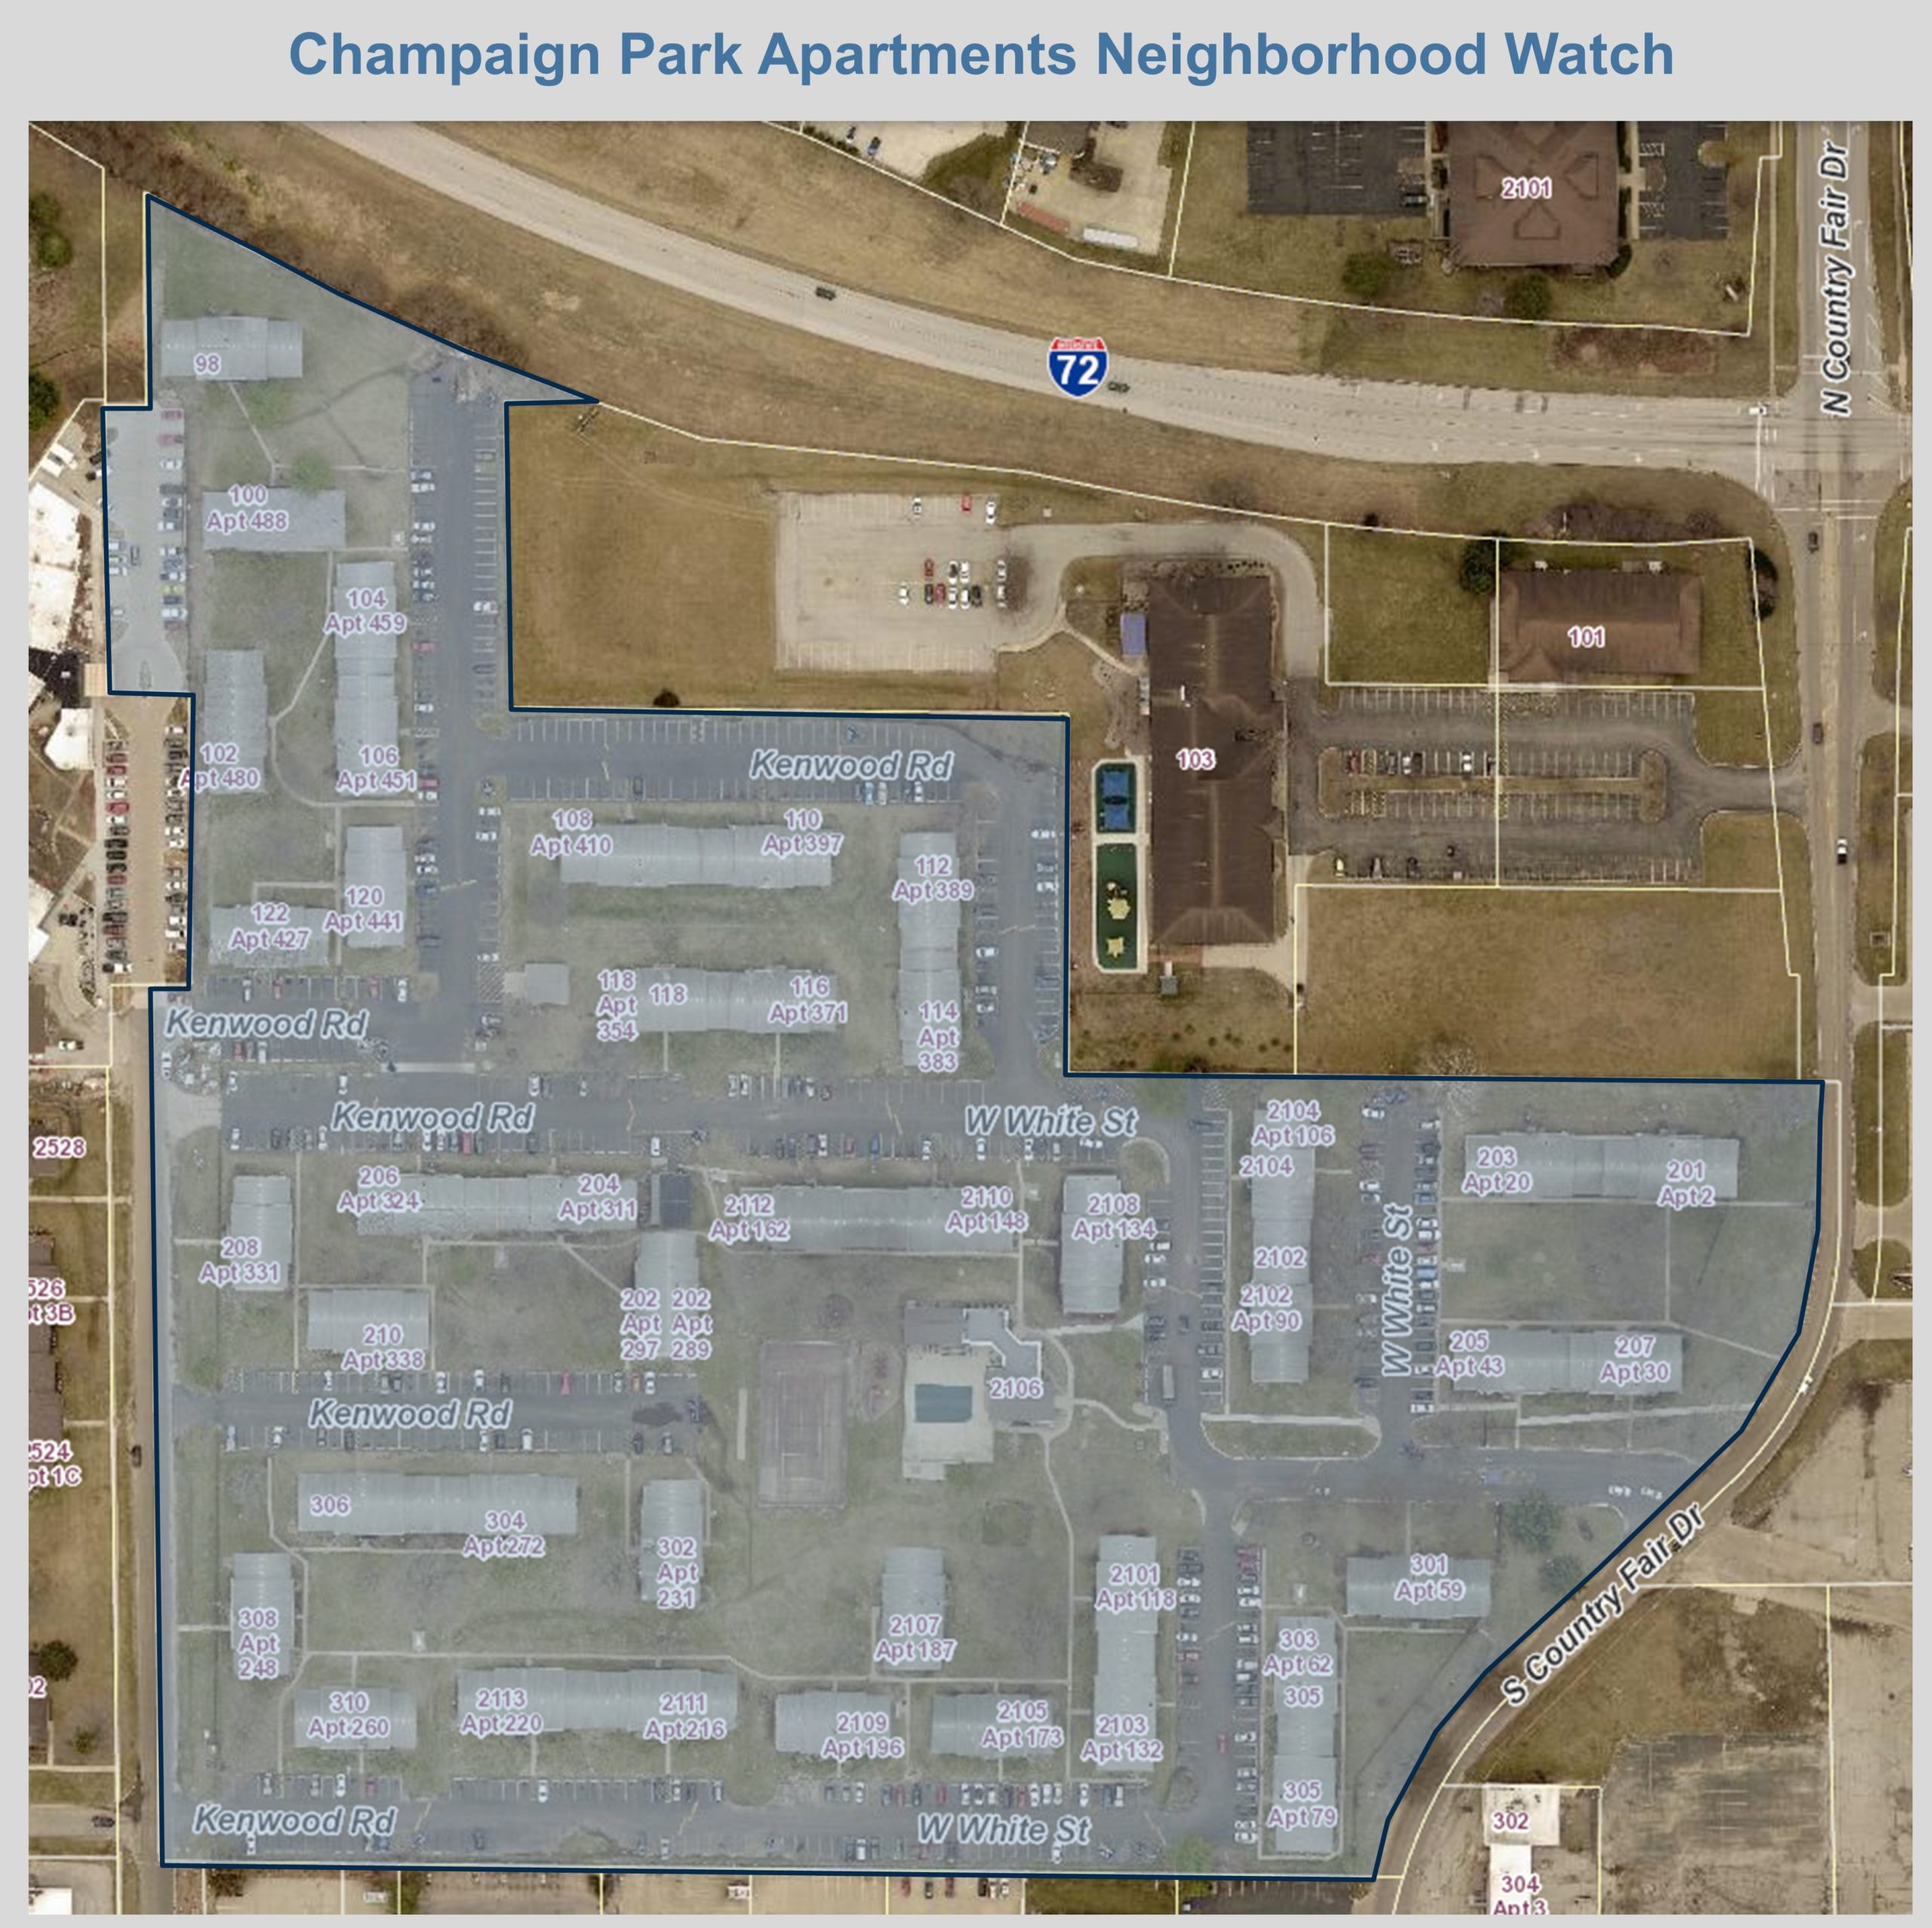 Champaign Park Apartments Neighborhood Watch Boundaries Map